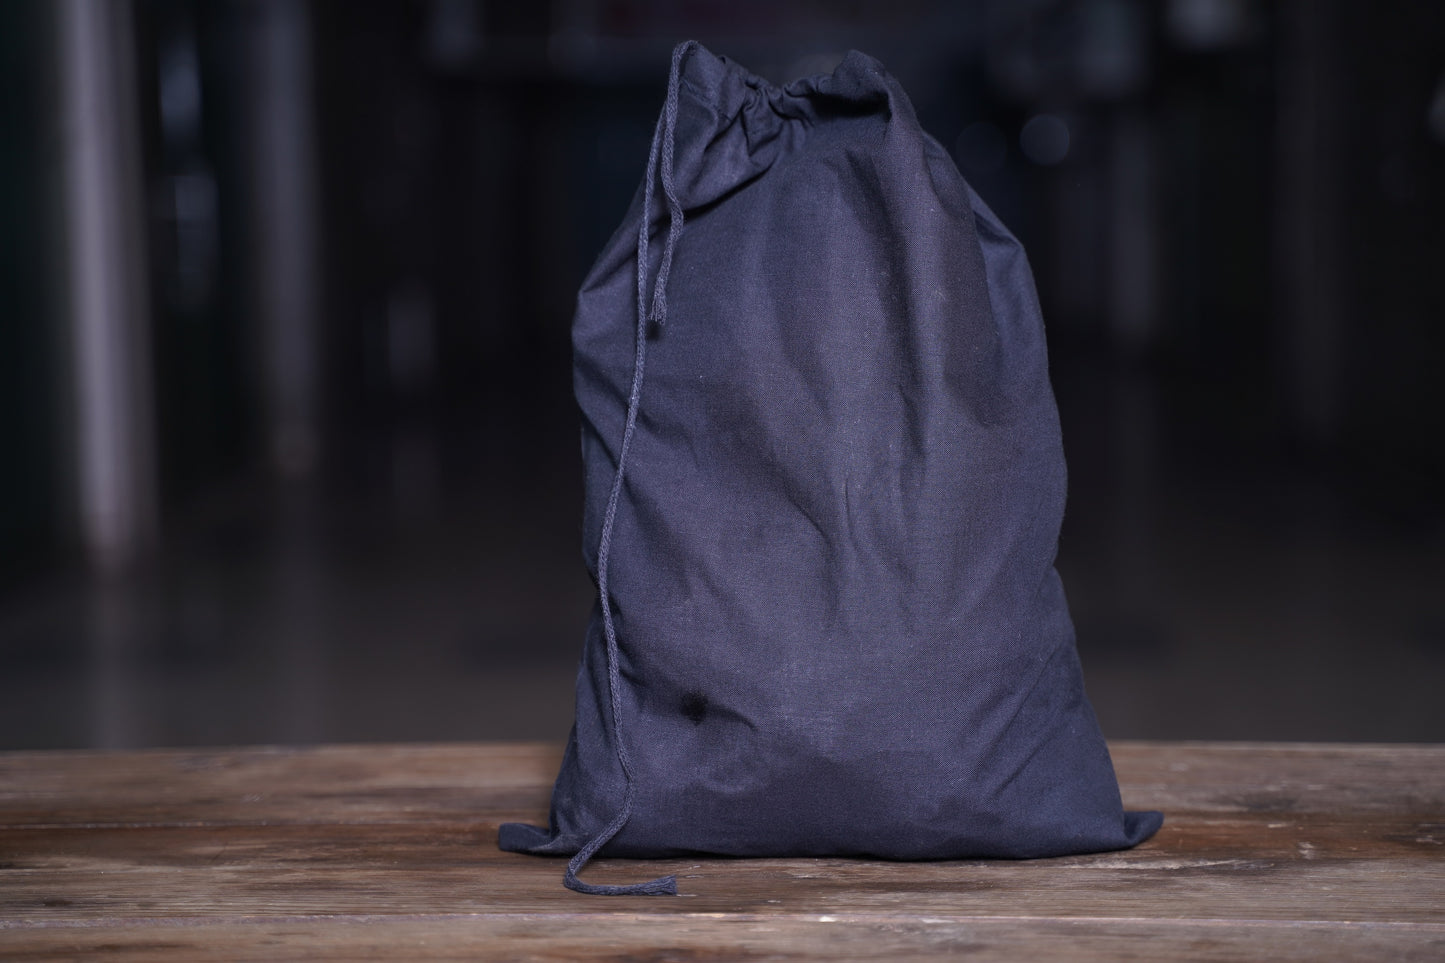 10x12 Inches Reusable Eco-Friendly Cotton Double Drawstring Bags Black Color